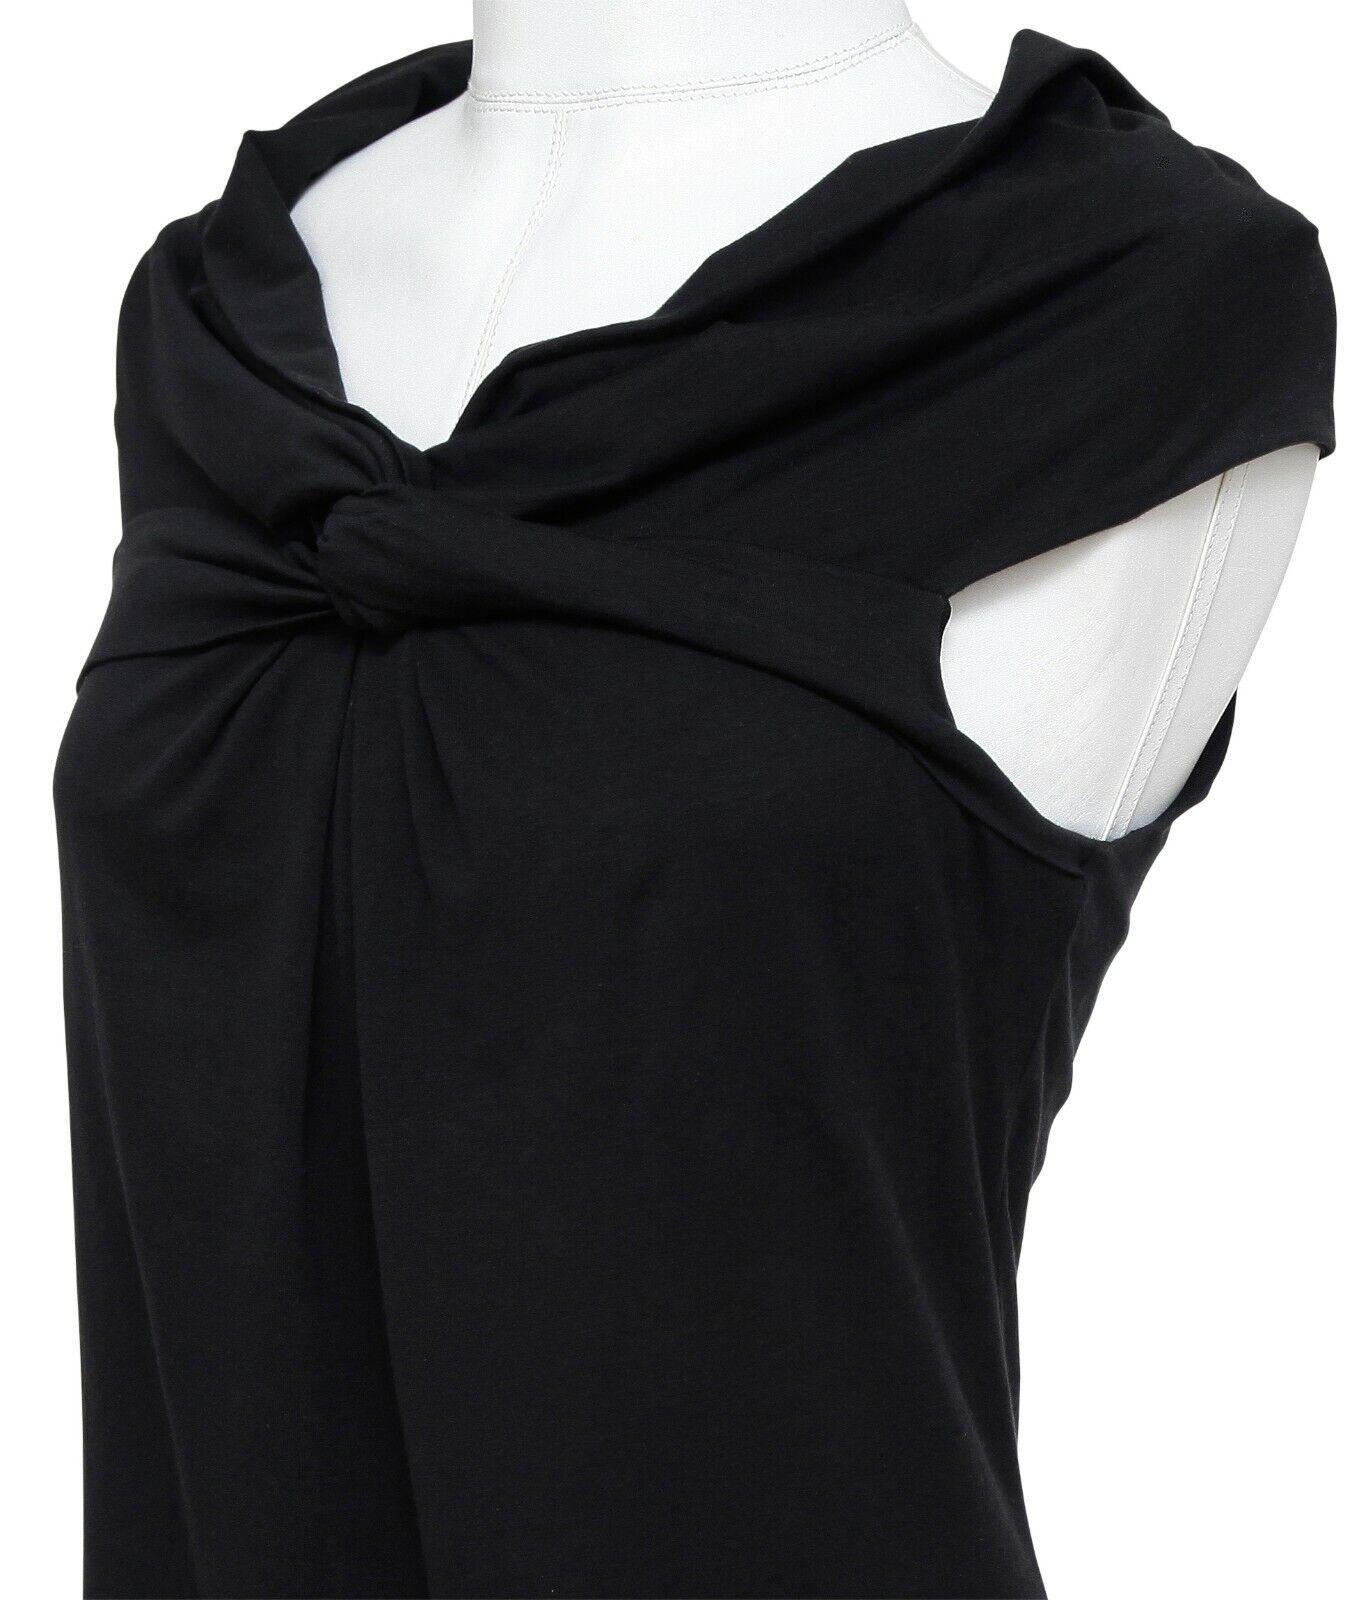 Women's MAX MARA Black Sweater Top Shirt Blouse Cotton Spandex Pullover Sleeveless Sz M For Sale